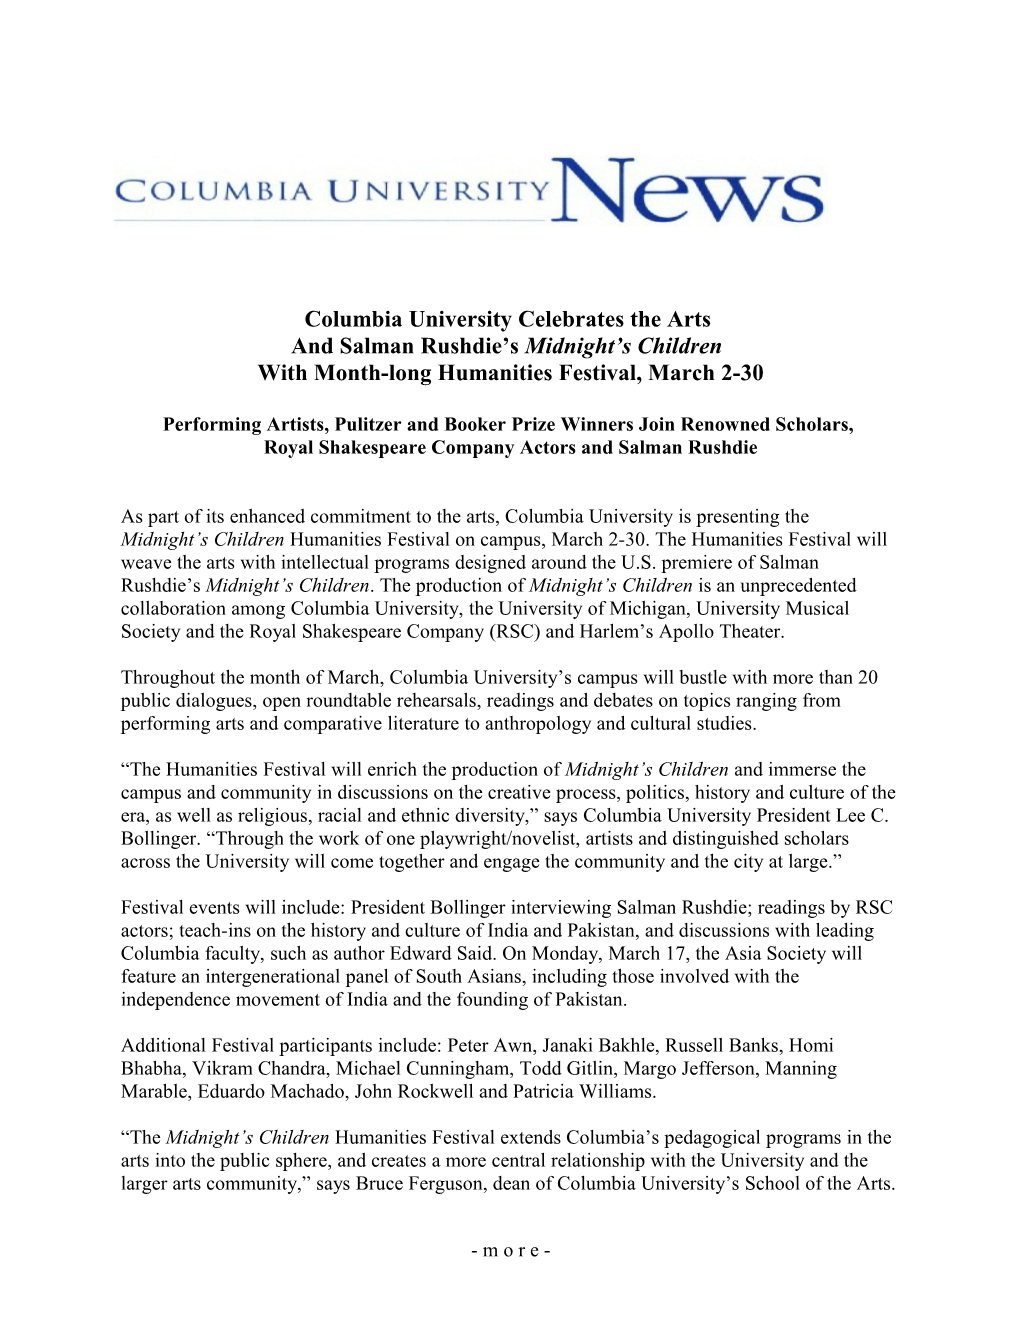 Columbia University Celebrates the Arts and Salman Rushdie S Midnight S Children Through